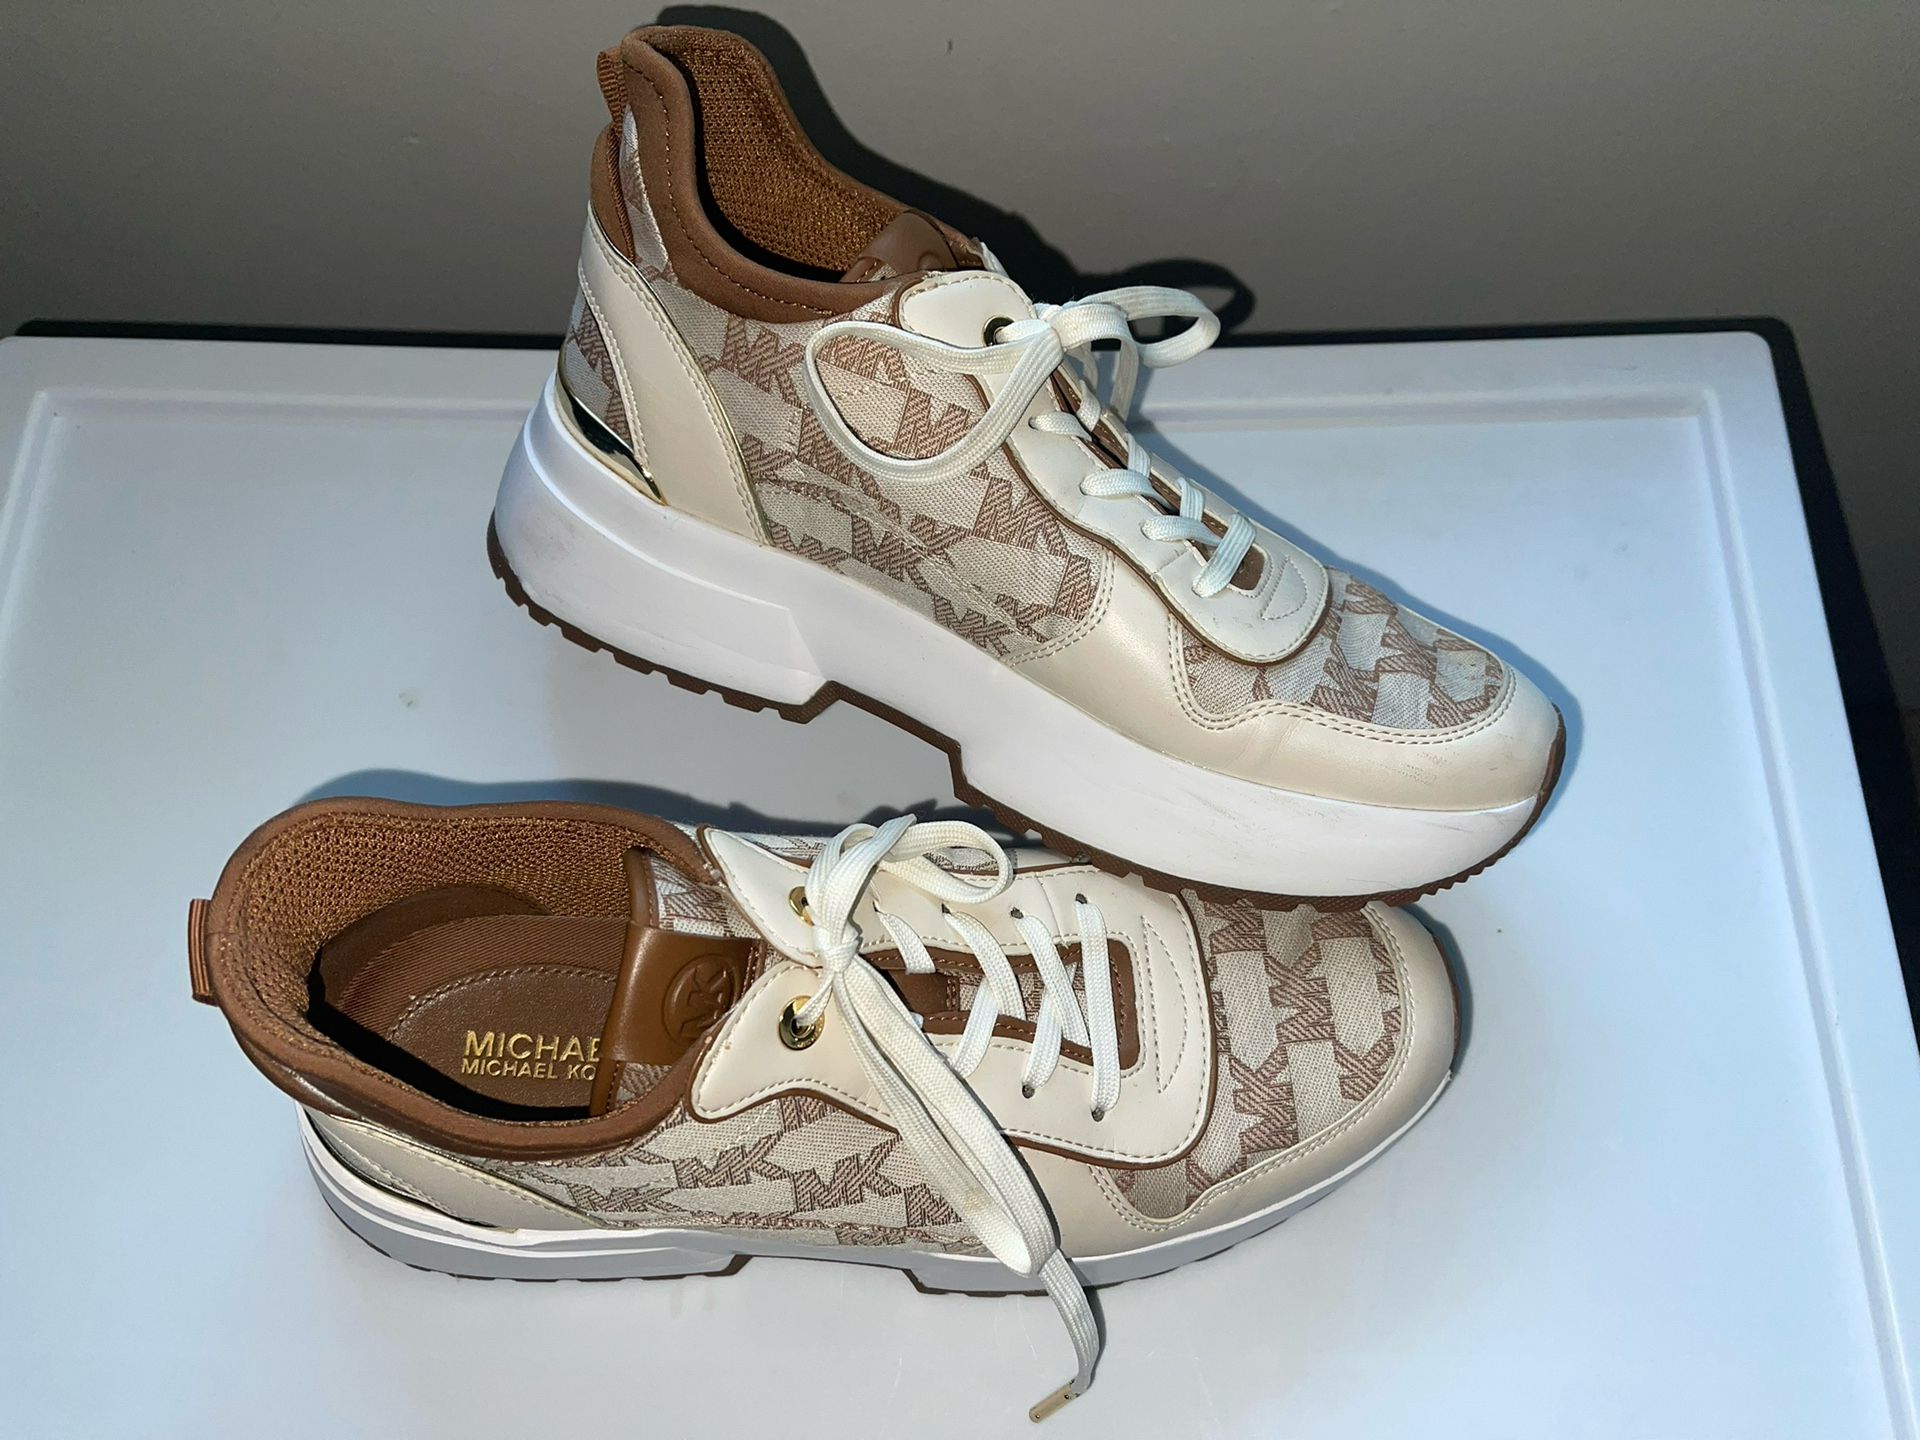 Michael Kors Tennis Shoes